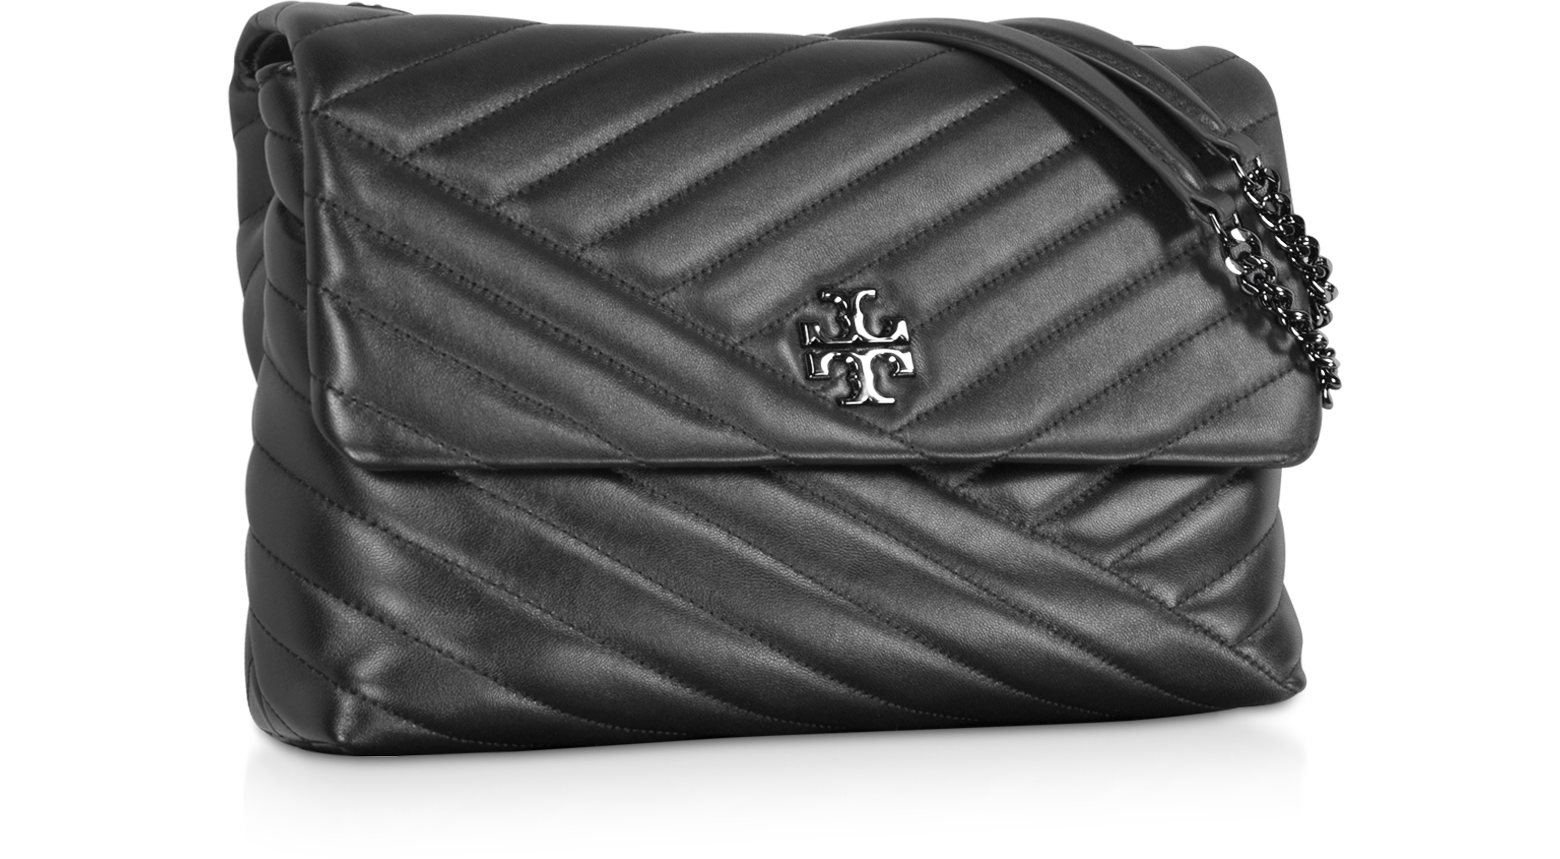 Tory Burch Kira Chevron Convertible Leather Shoulder Bag - Black